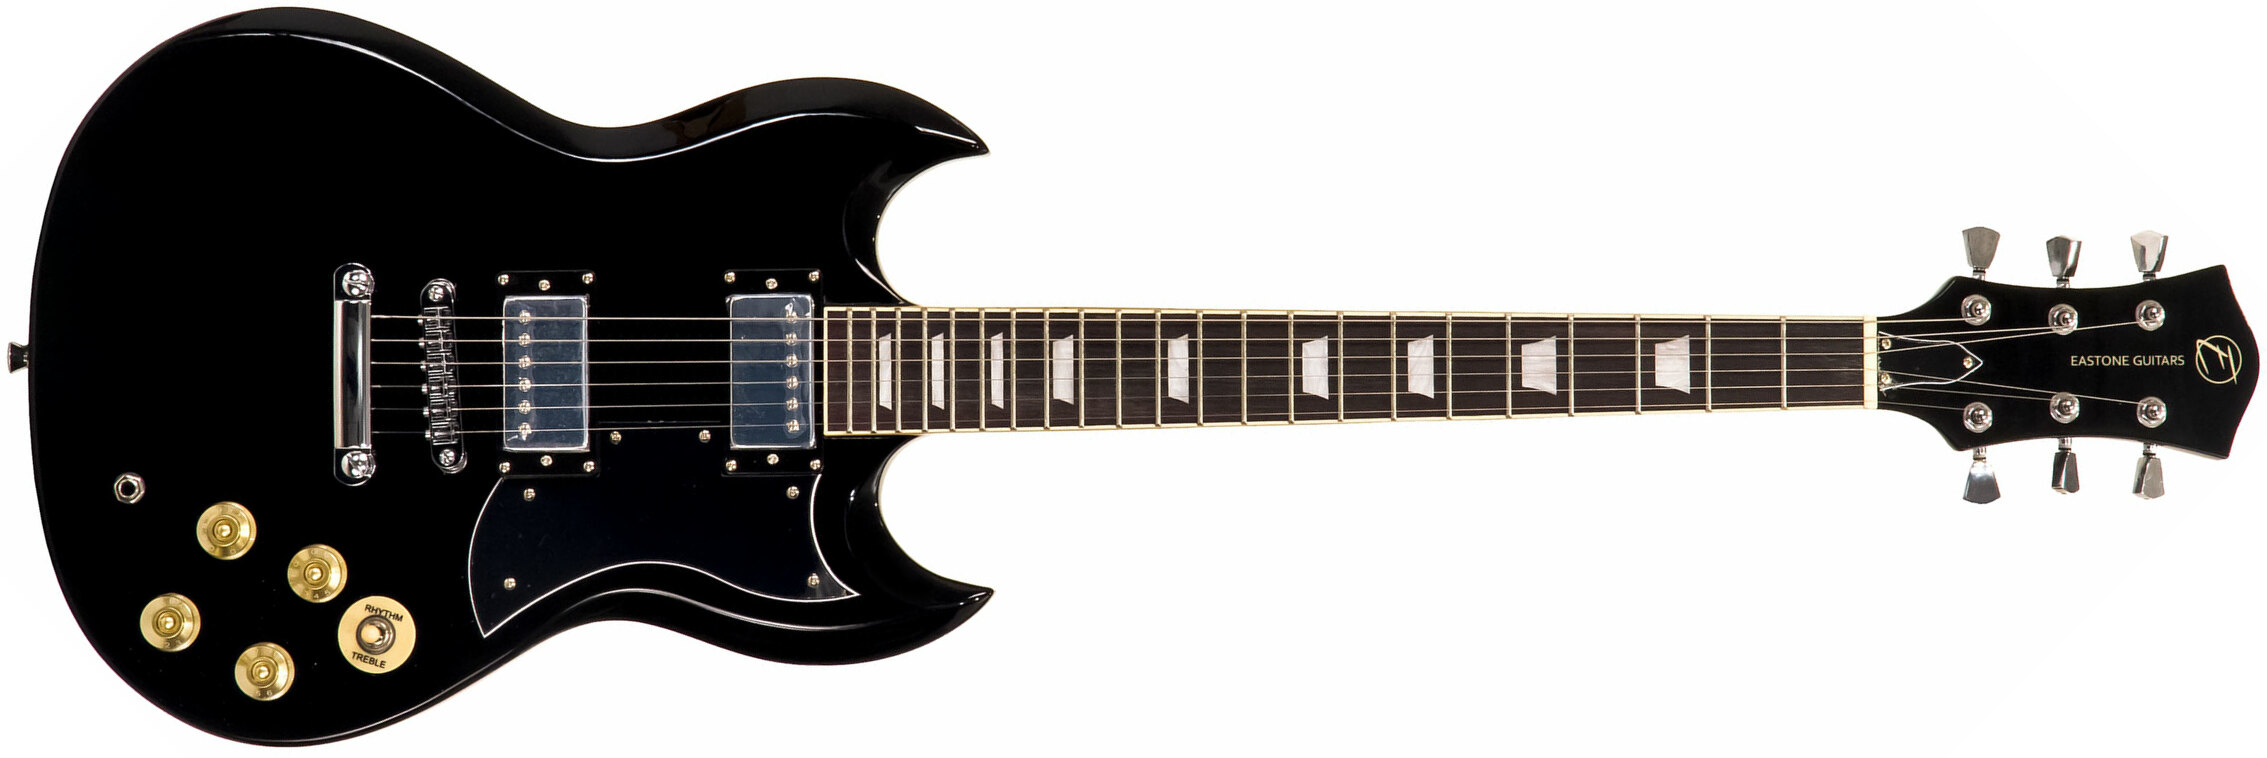 Eastone Sdc70 Hh Ht Pur - Black - Guitarra electrica retro rock - Main picture